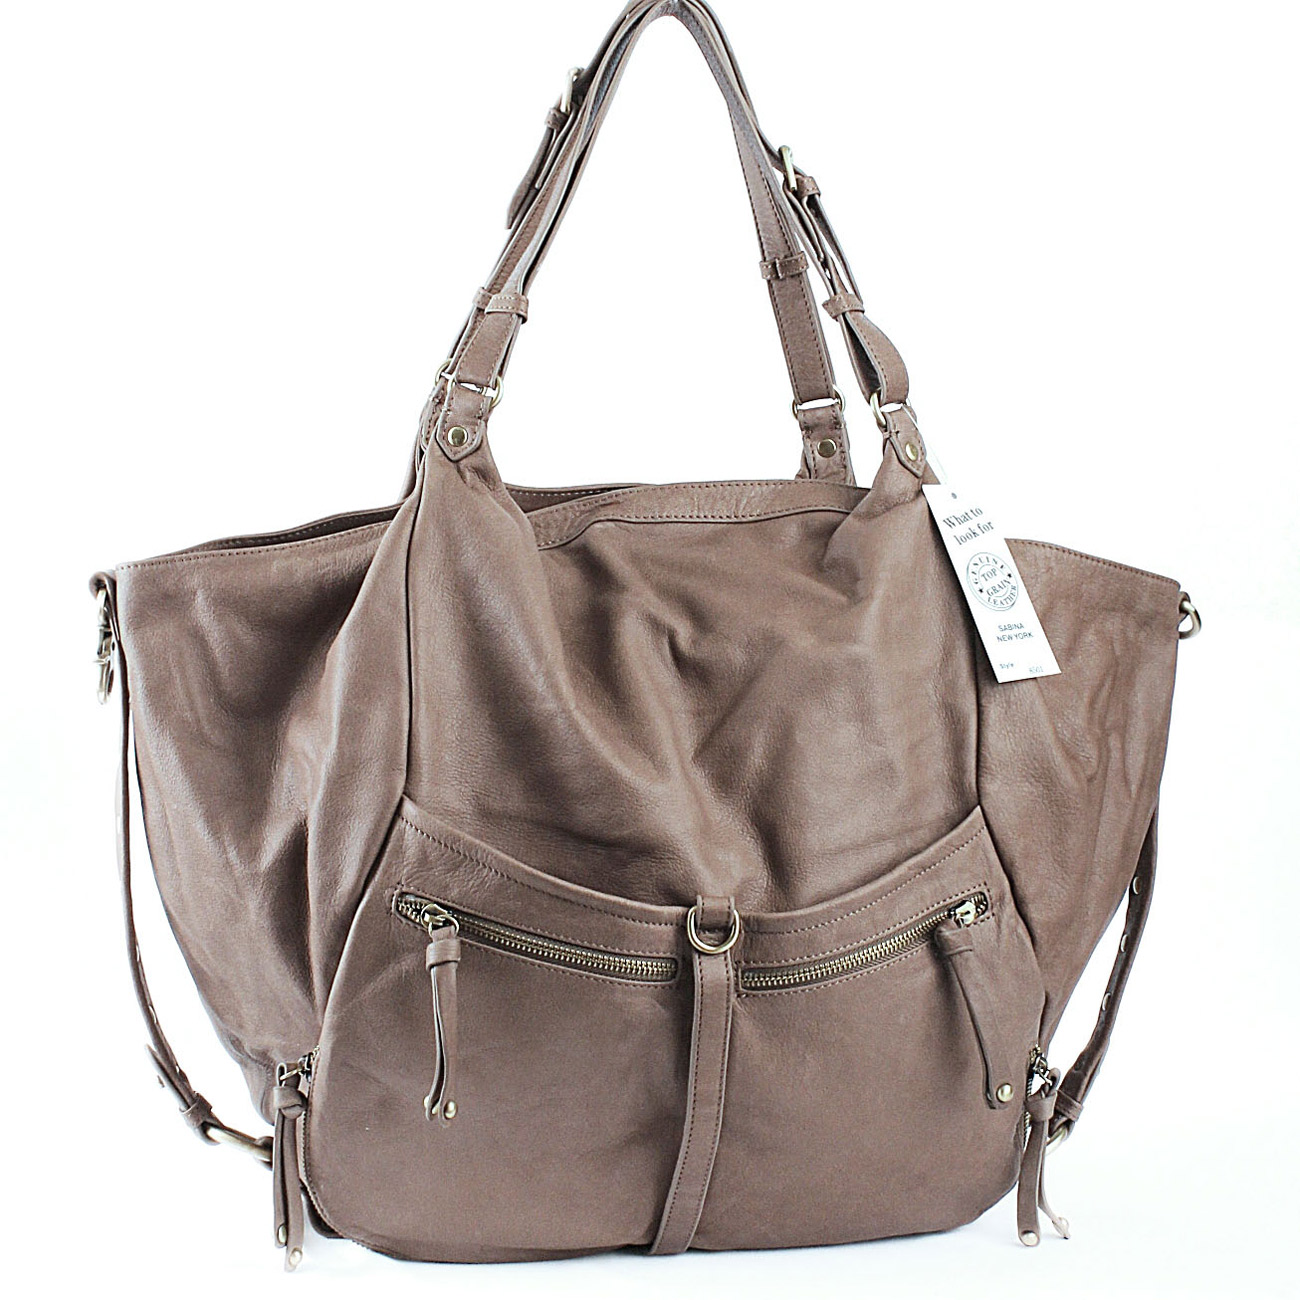 Used Designer Handbags Blog